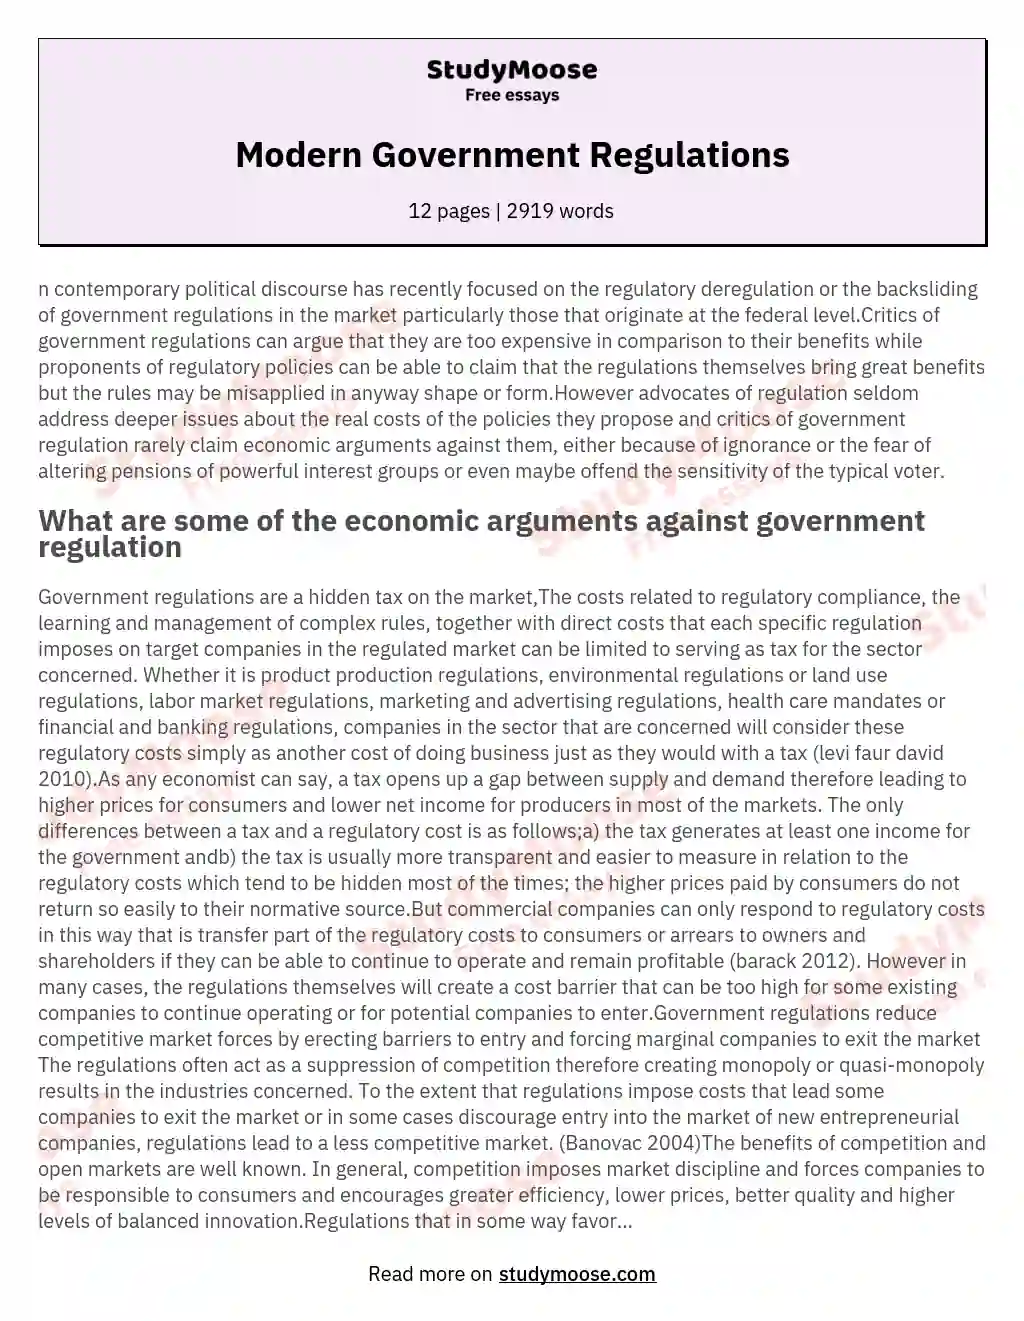 Modern Government Regulations essay